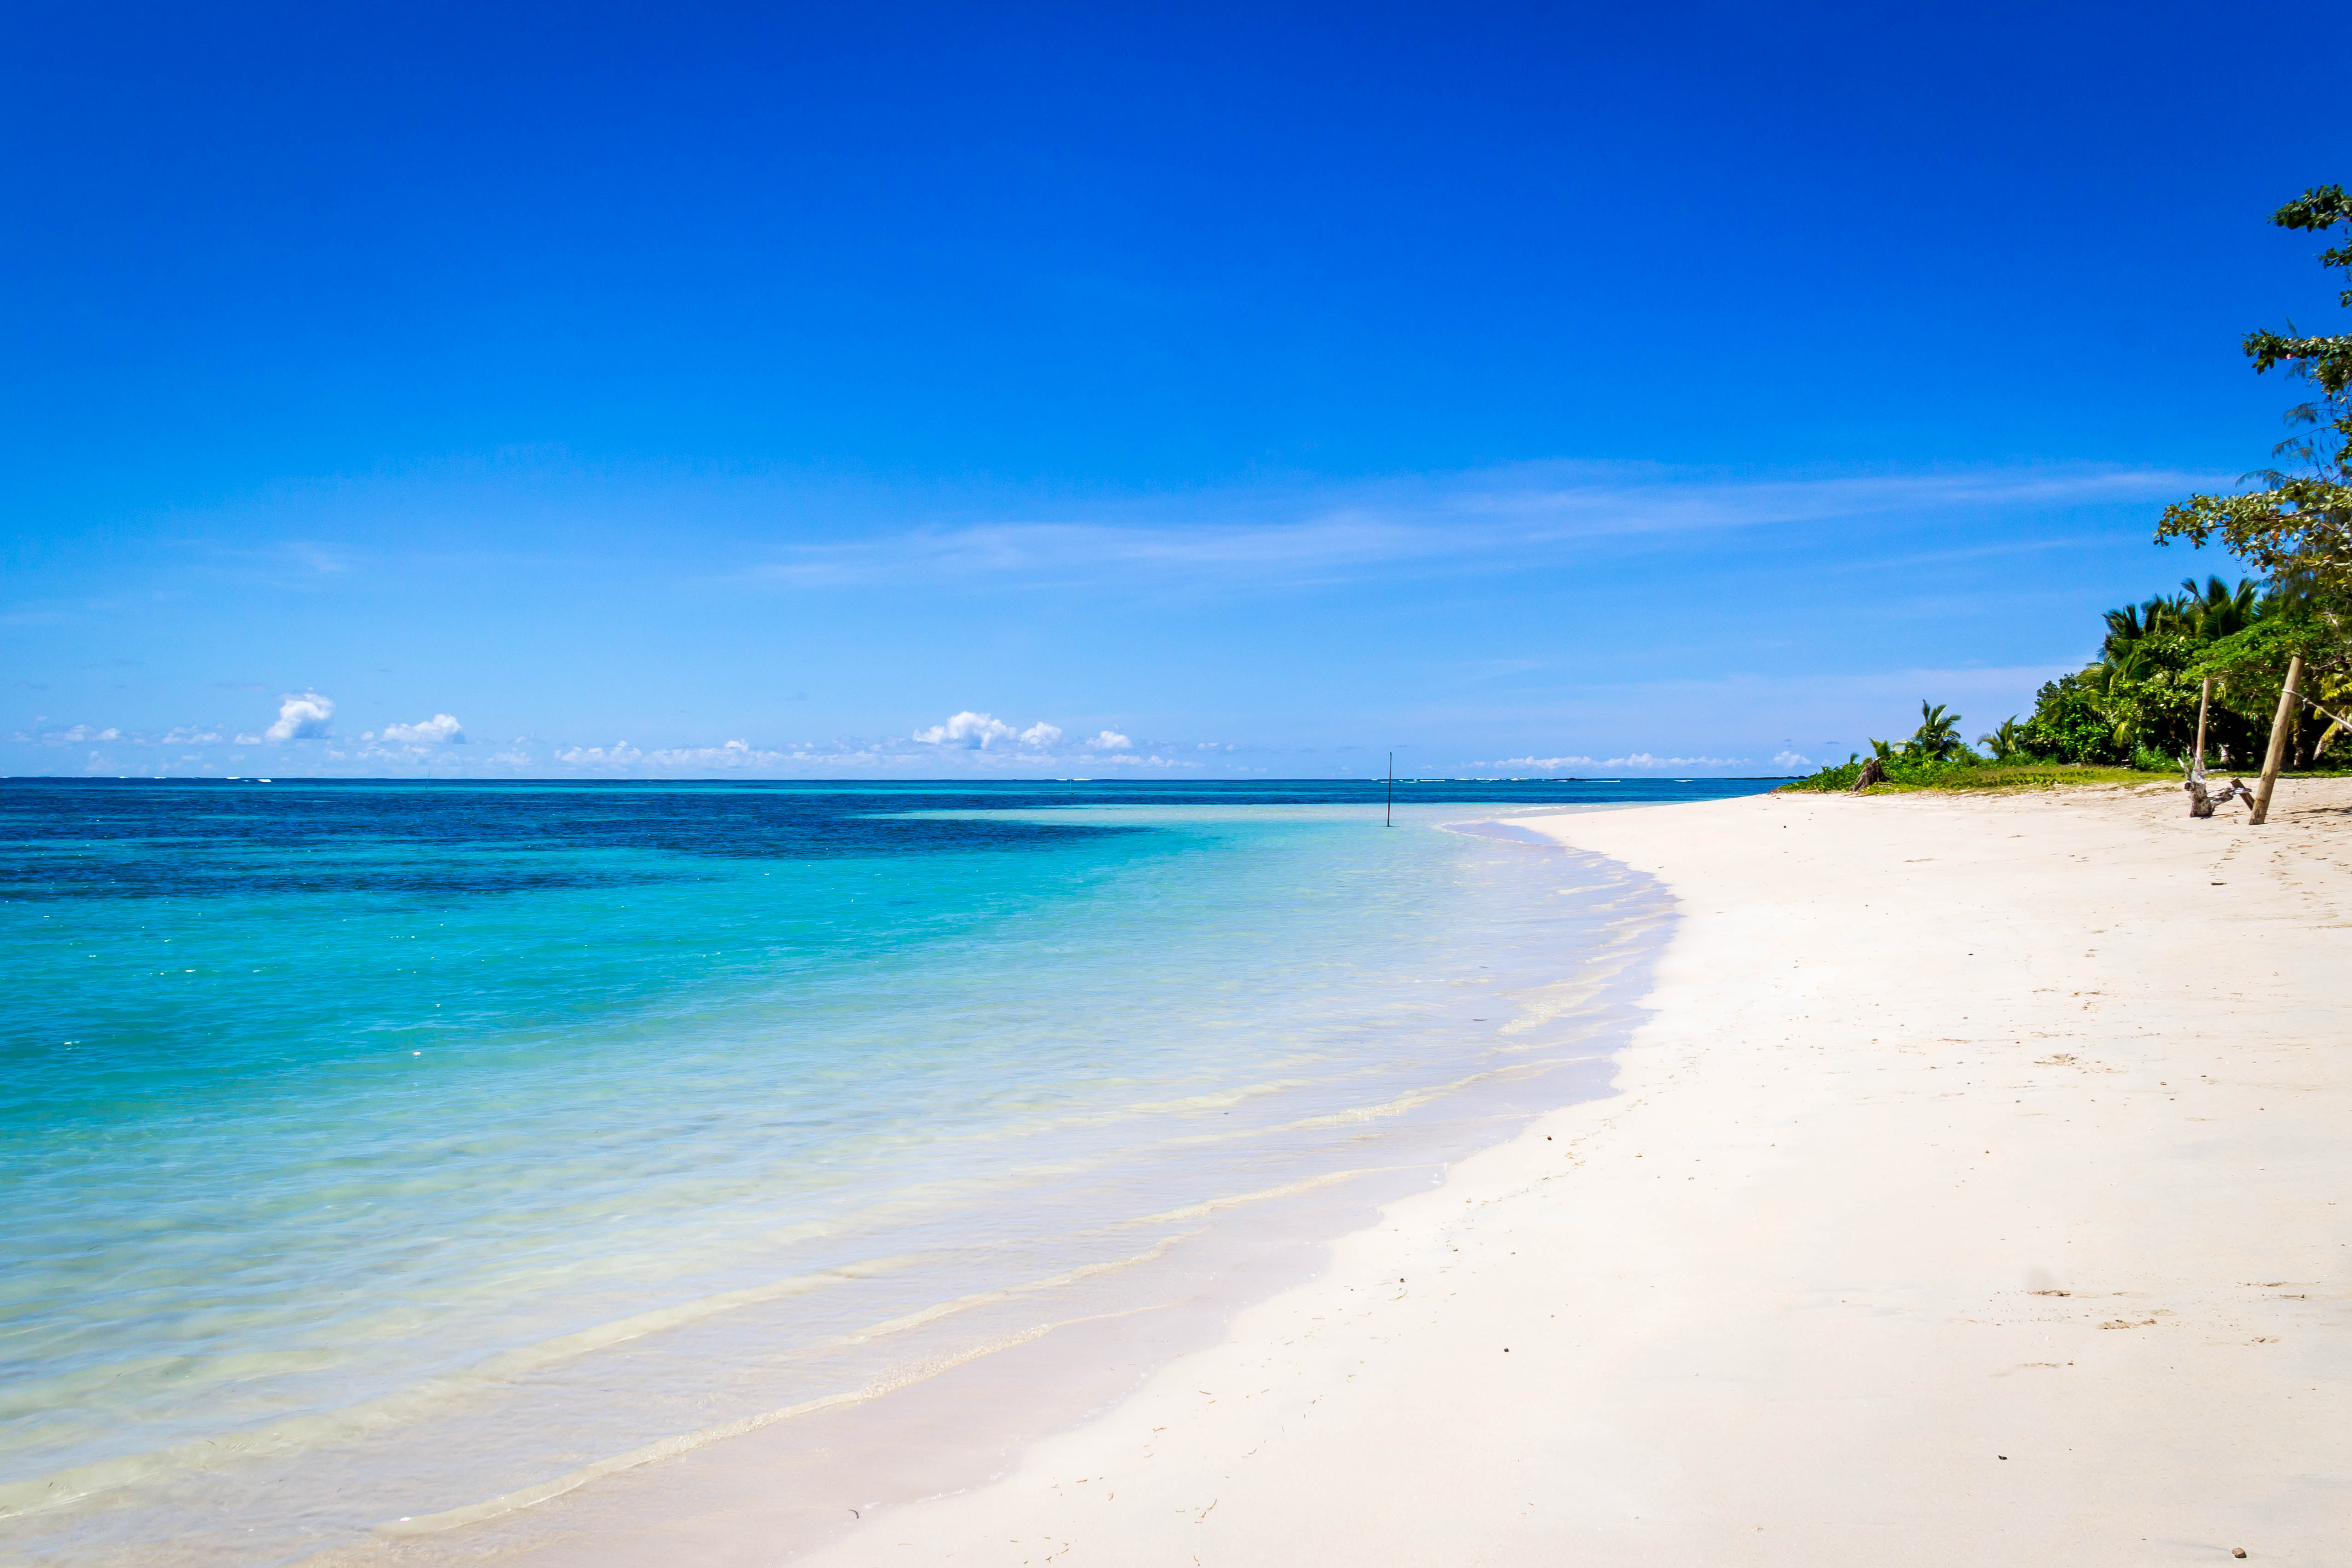 Blizkey пляж. Остров Баунти Фиджи. Сува Фиджи пляж. Остров Саона голубая Лагуна. Голубая Лагуна Саона Доминикана.